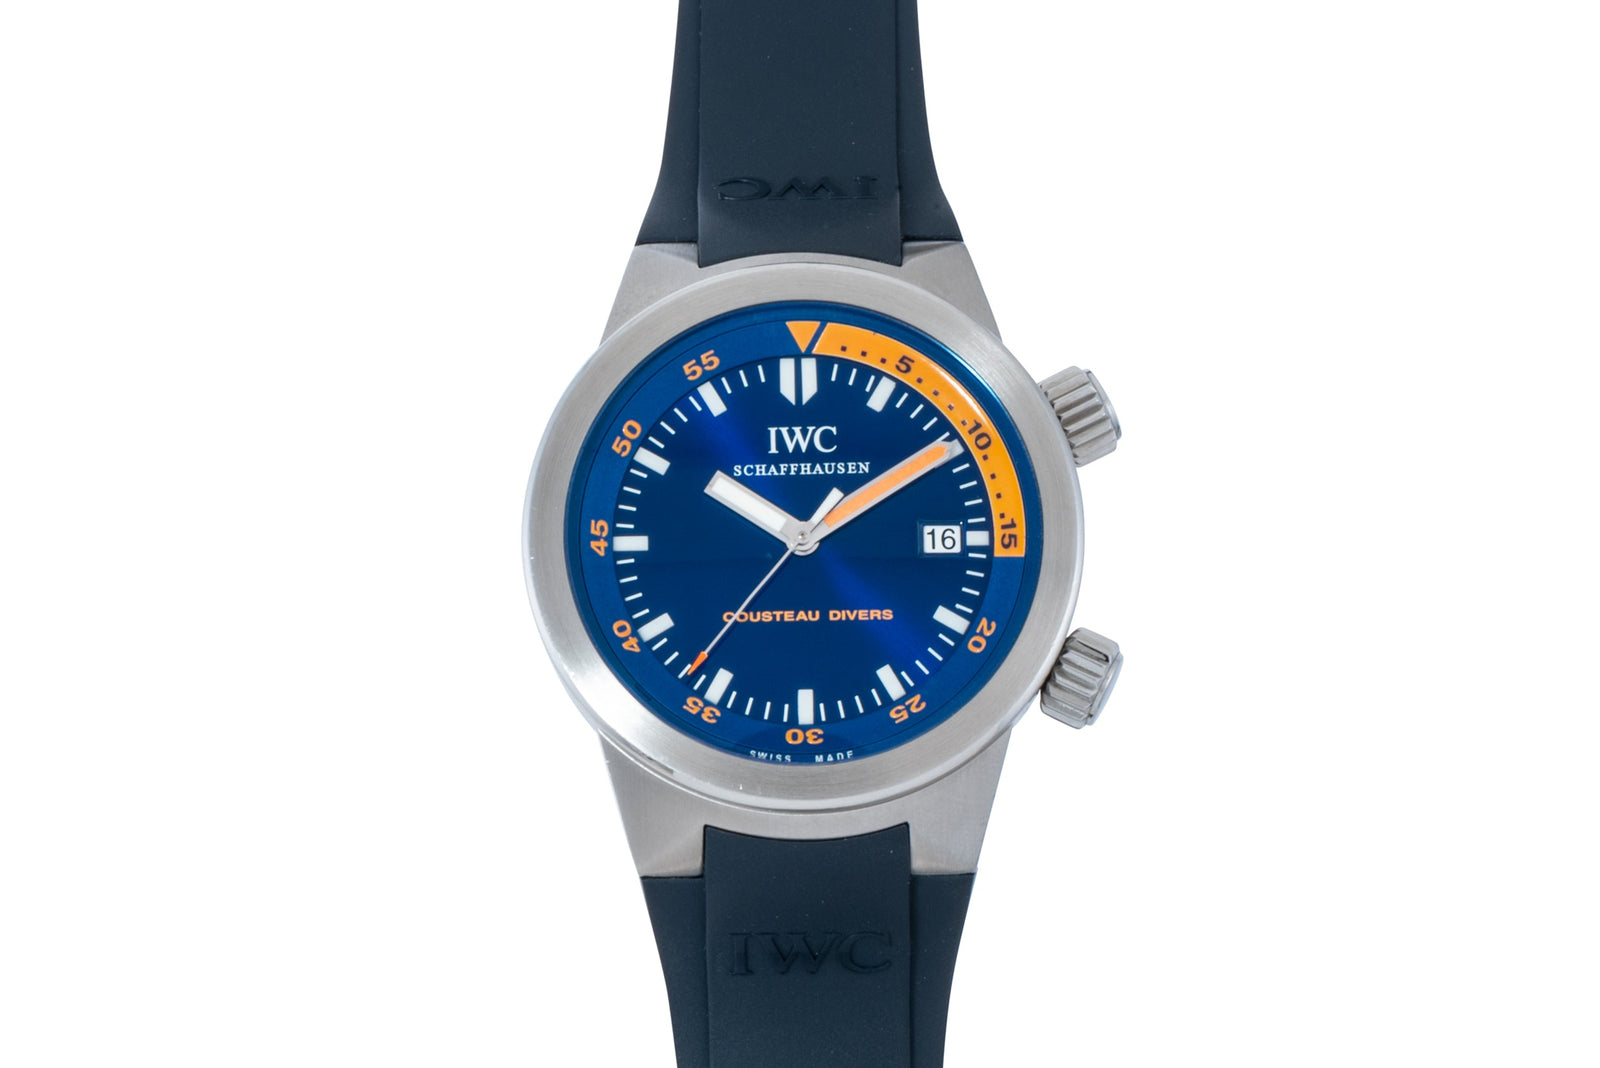 IWC Aquatimer Cousteau Divers Limited Edition